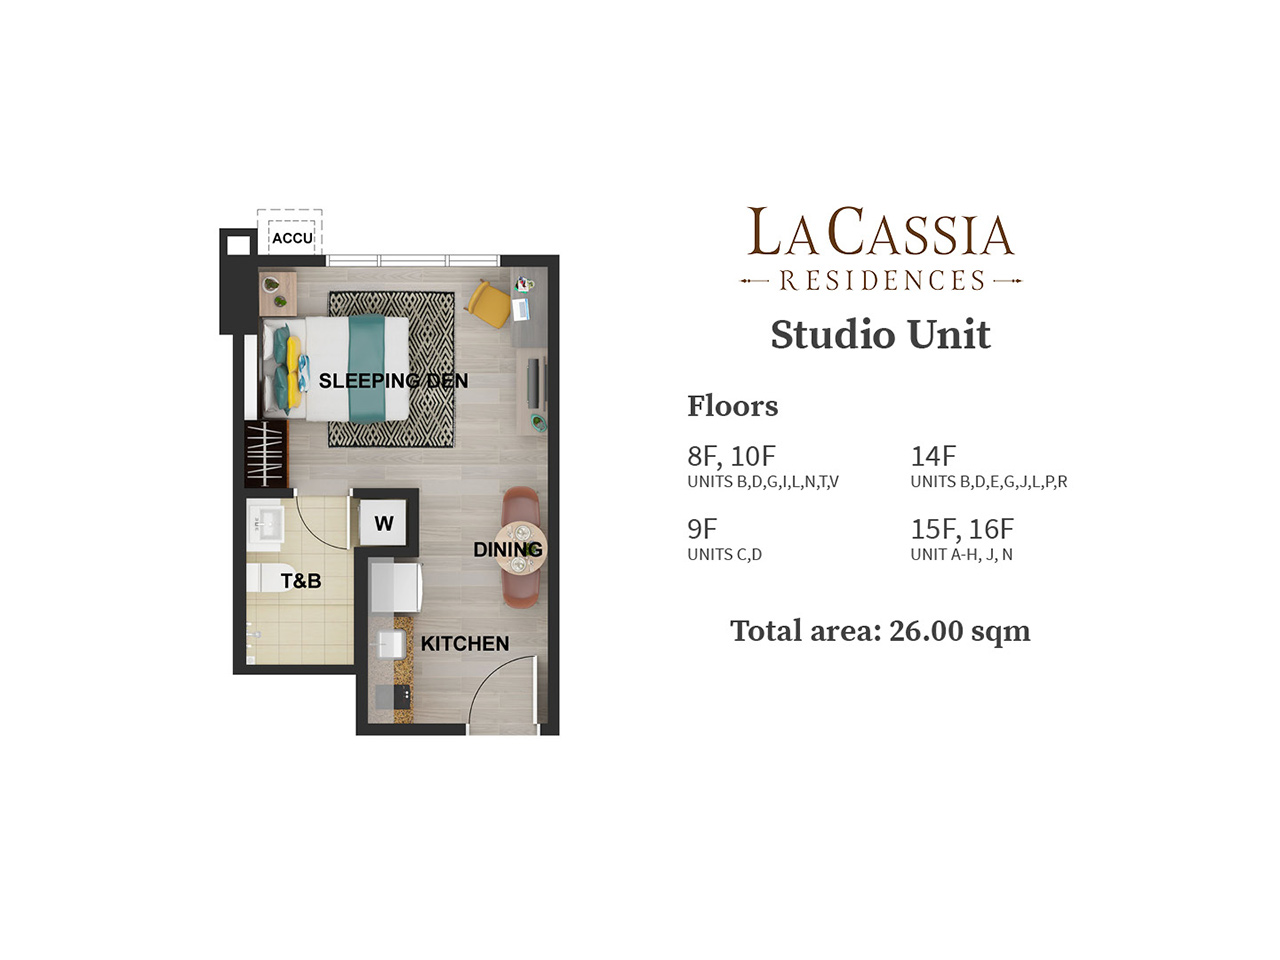 La Cassia Residences Maple Grove Cavite S Business District